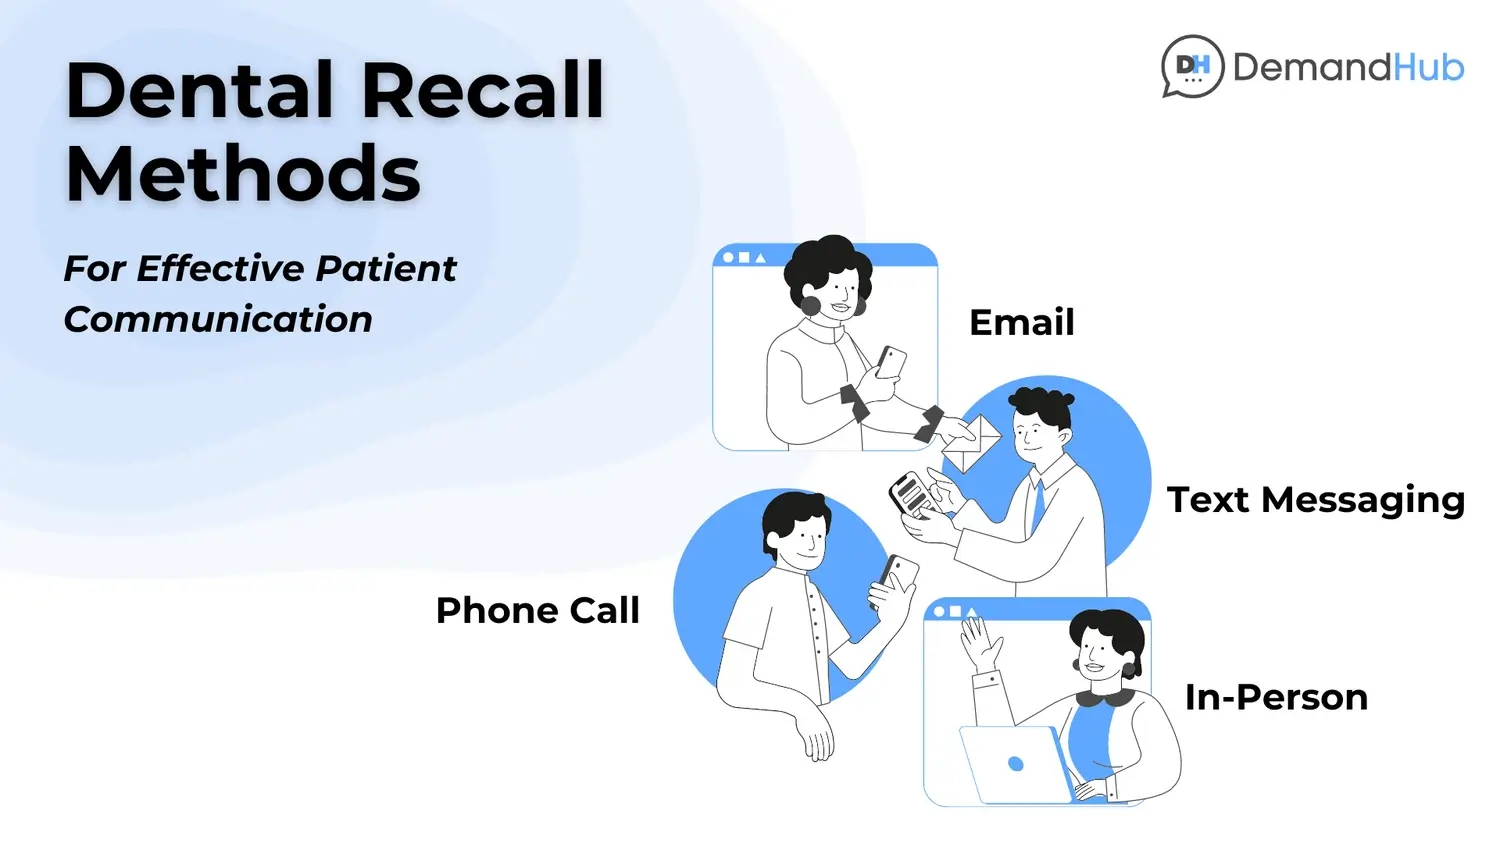 Dental recall methods for effective patient communication